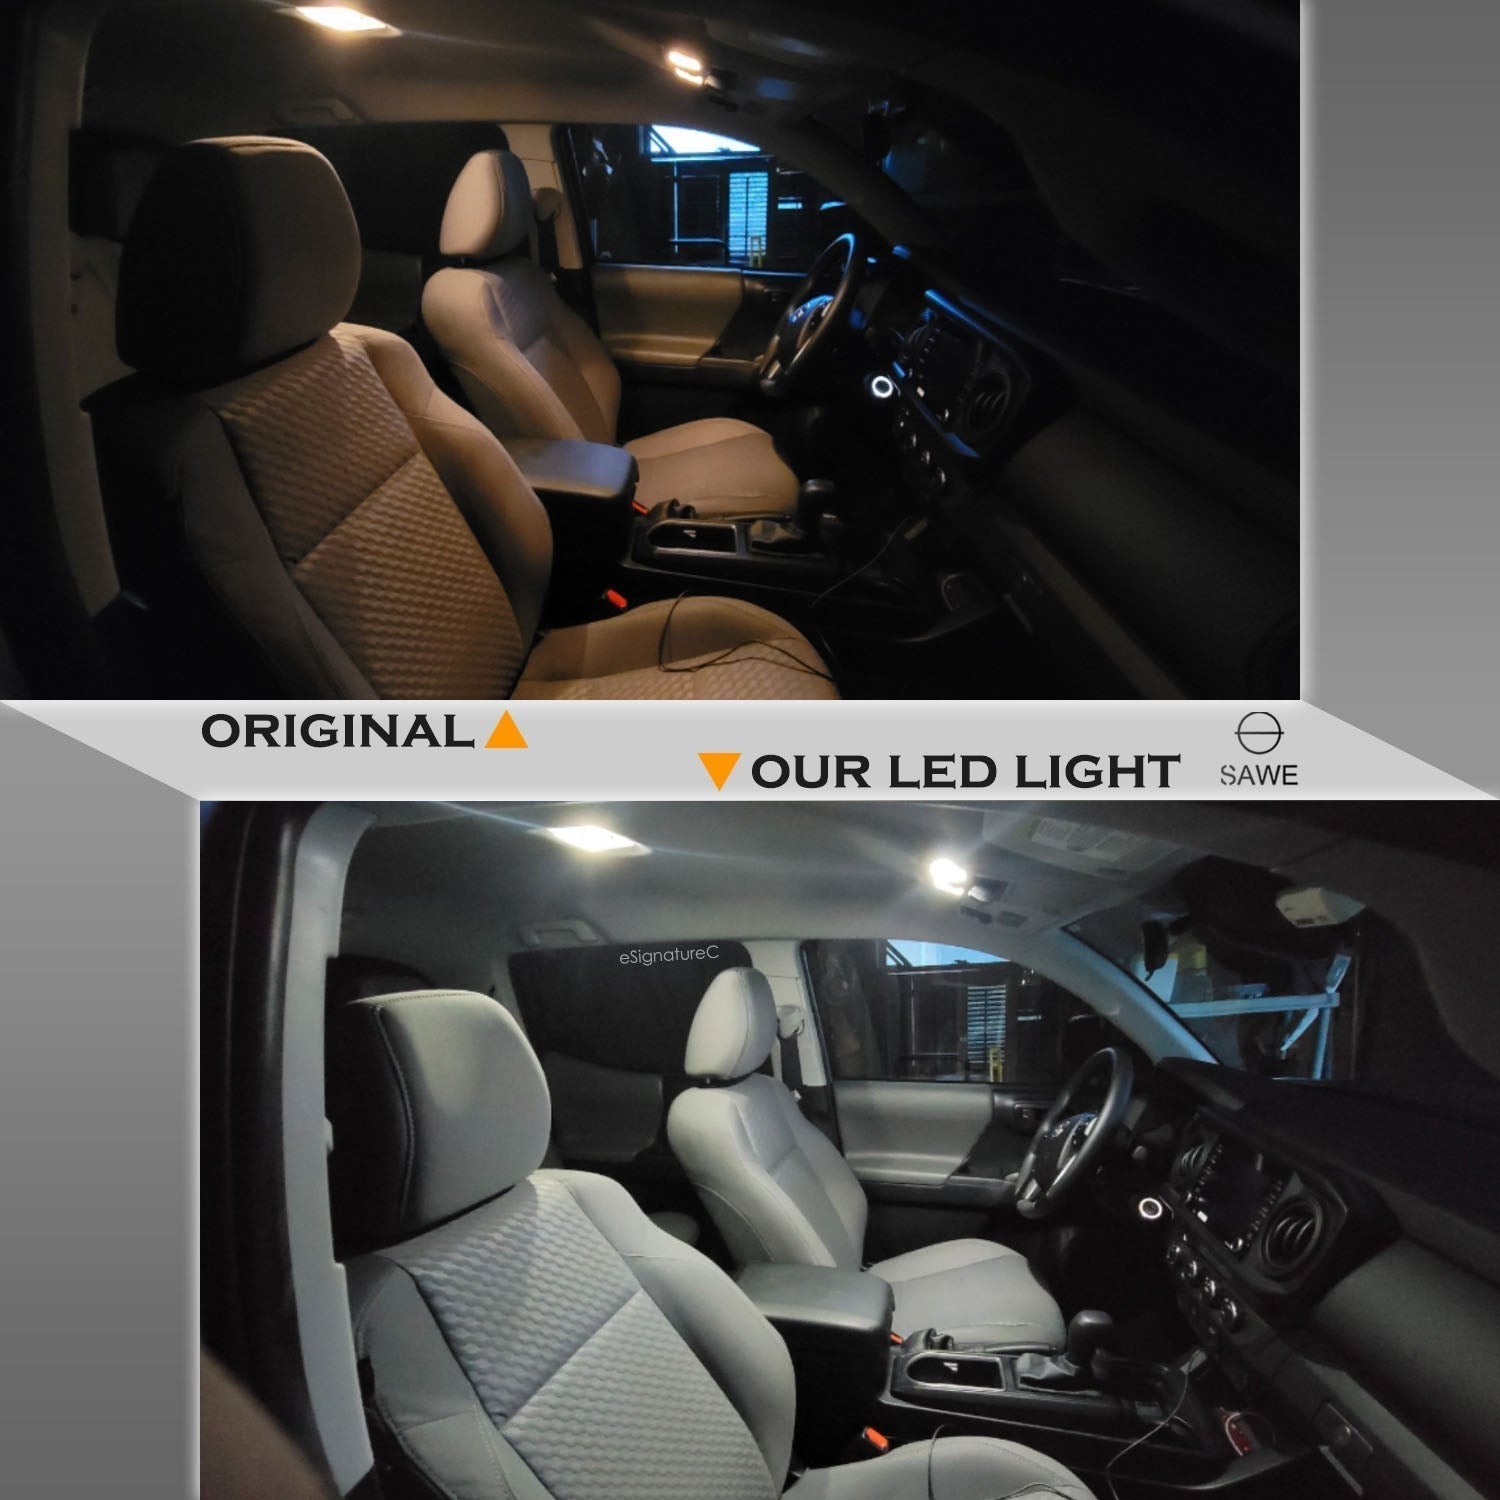 For Honda Civic Interior LED Lights - Dome & Map Lights Package Kit for 2001 - 2005 - White